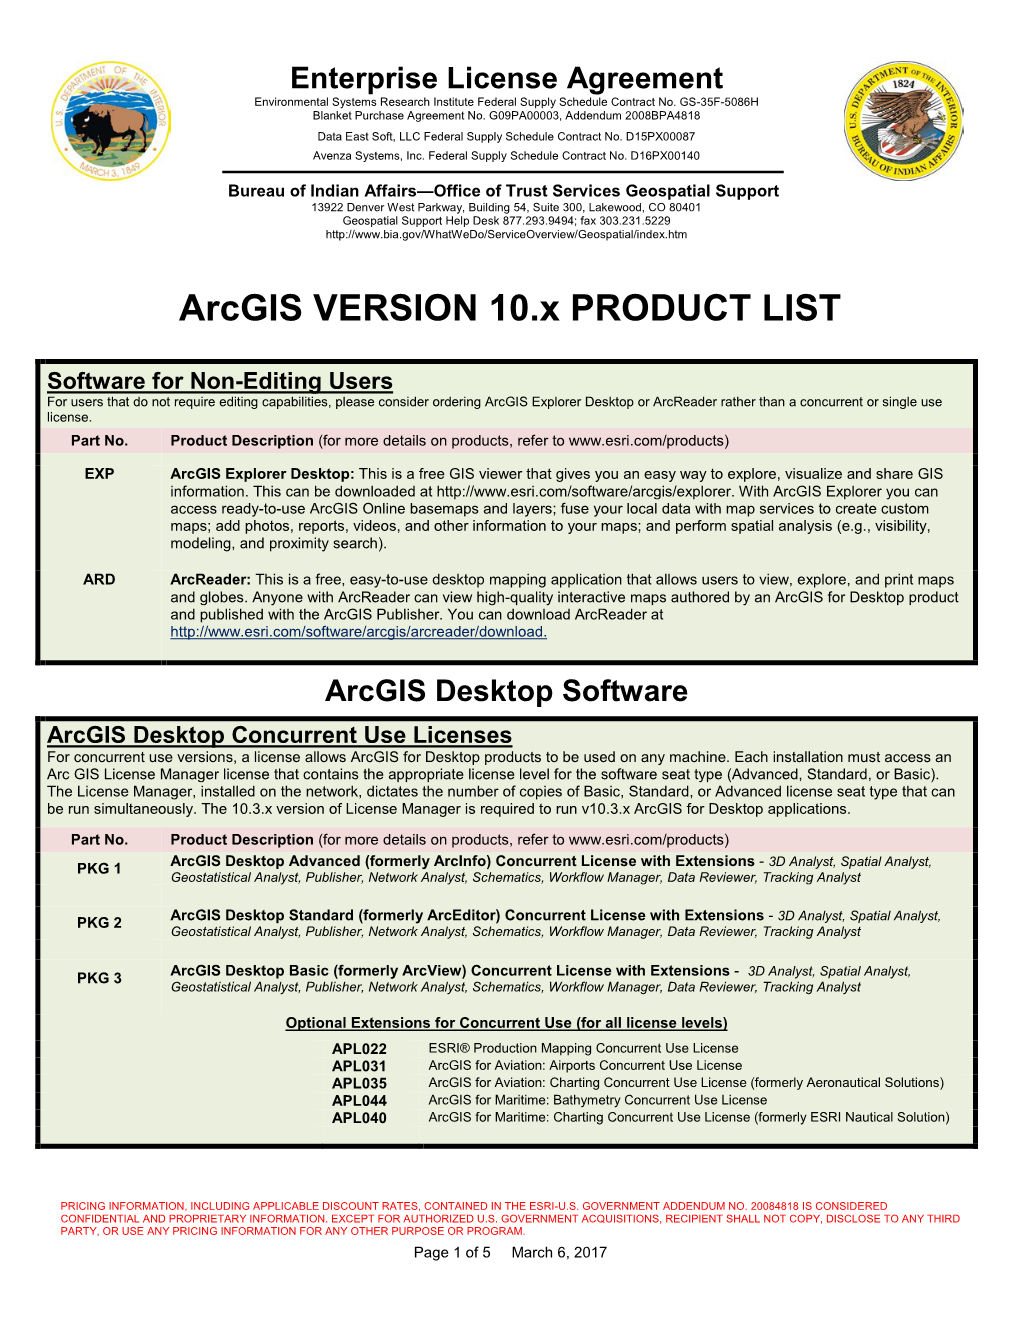 Arcgis VERSION 10.X PRODUCT LIST